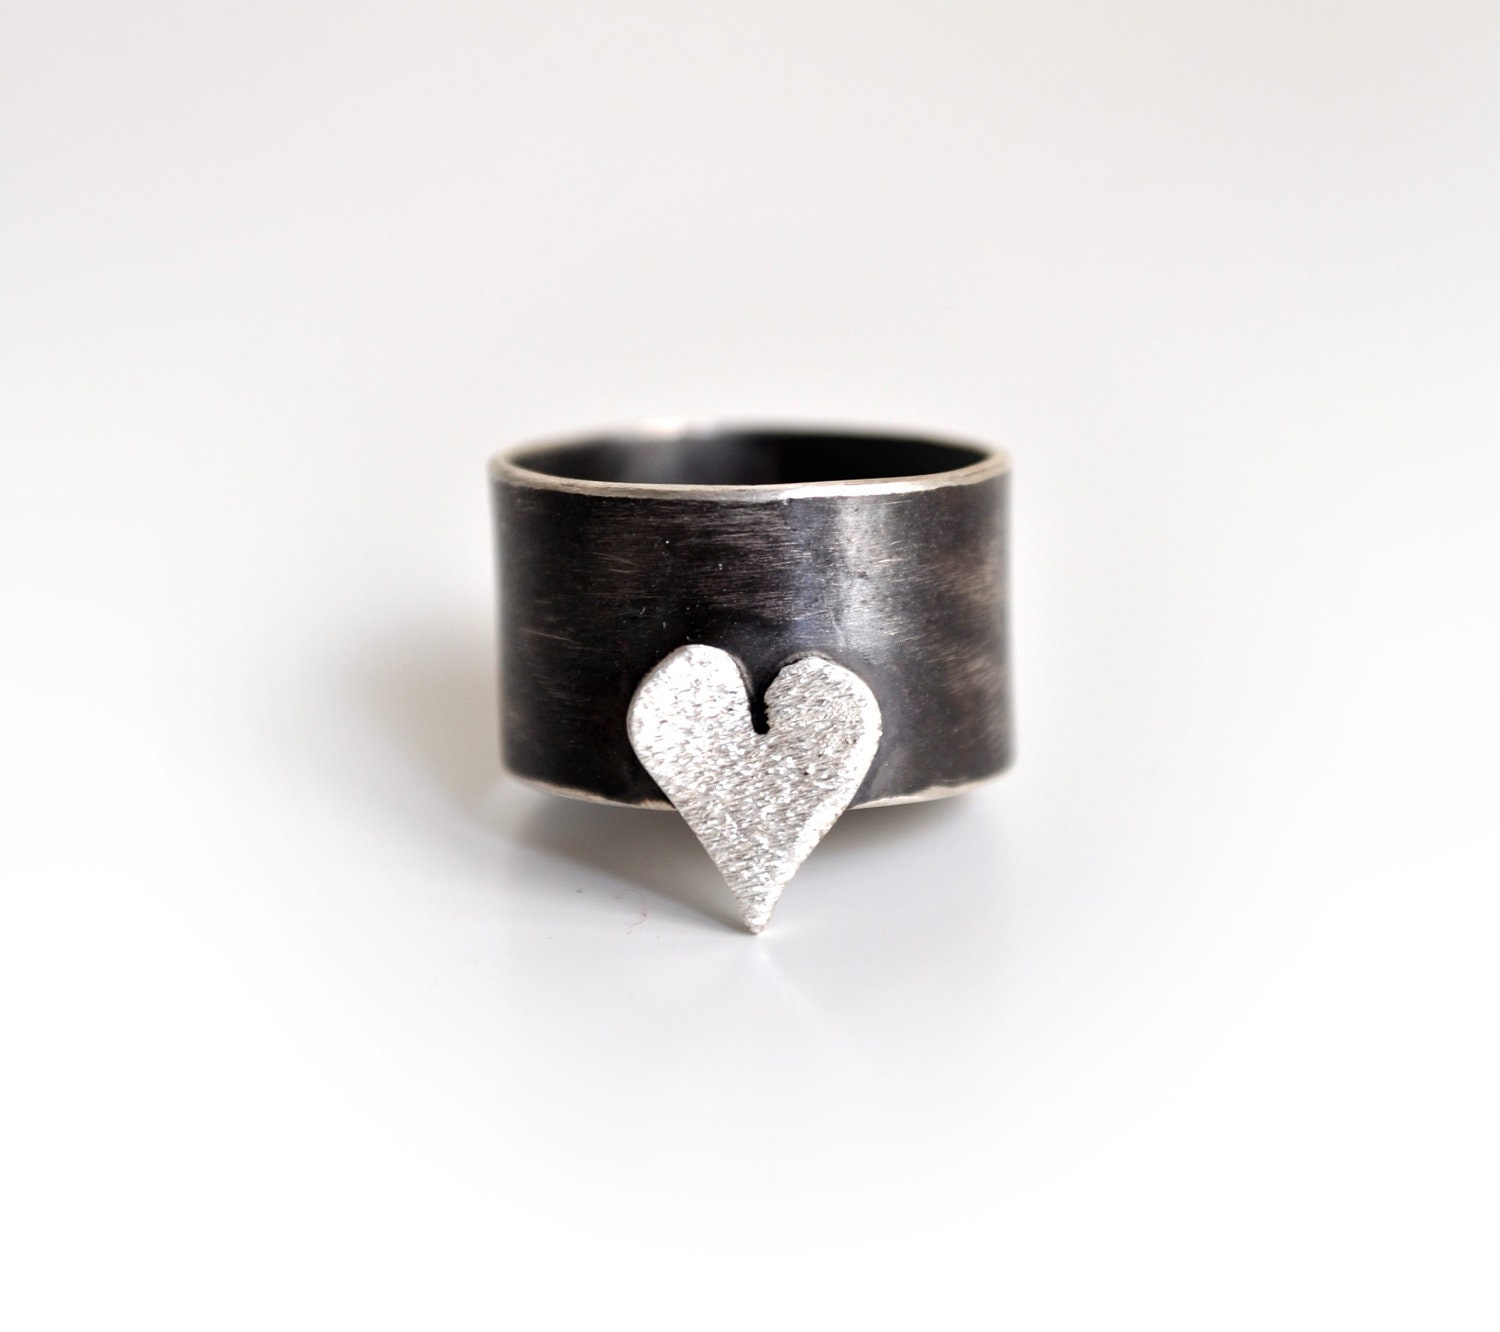 ... Silver Heart Ring-Oxidised Chevalier Ring-Dark Romantic Ring-Under 50